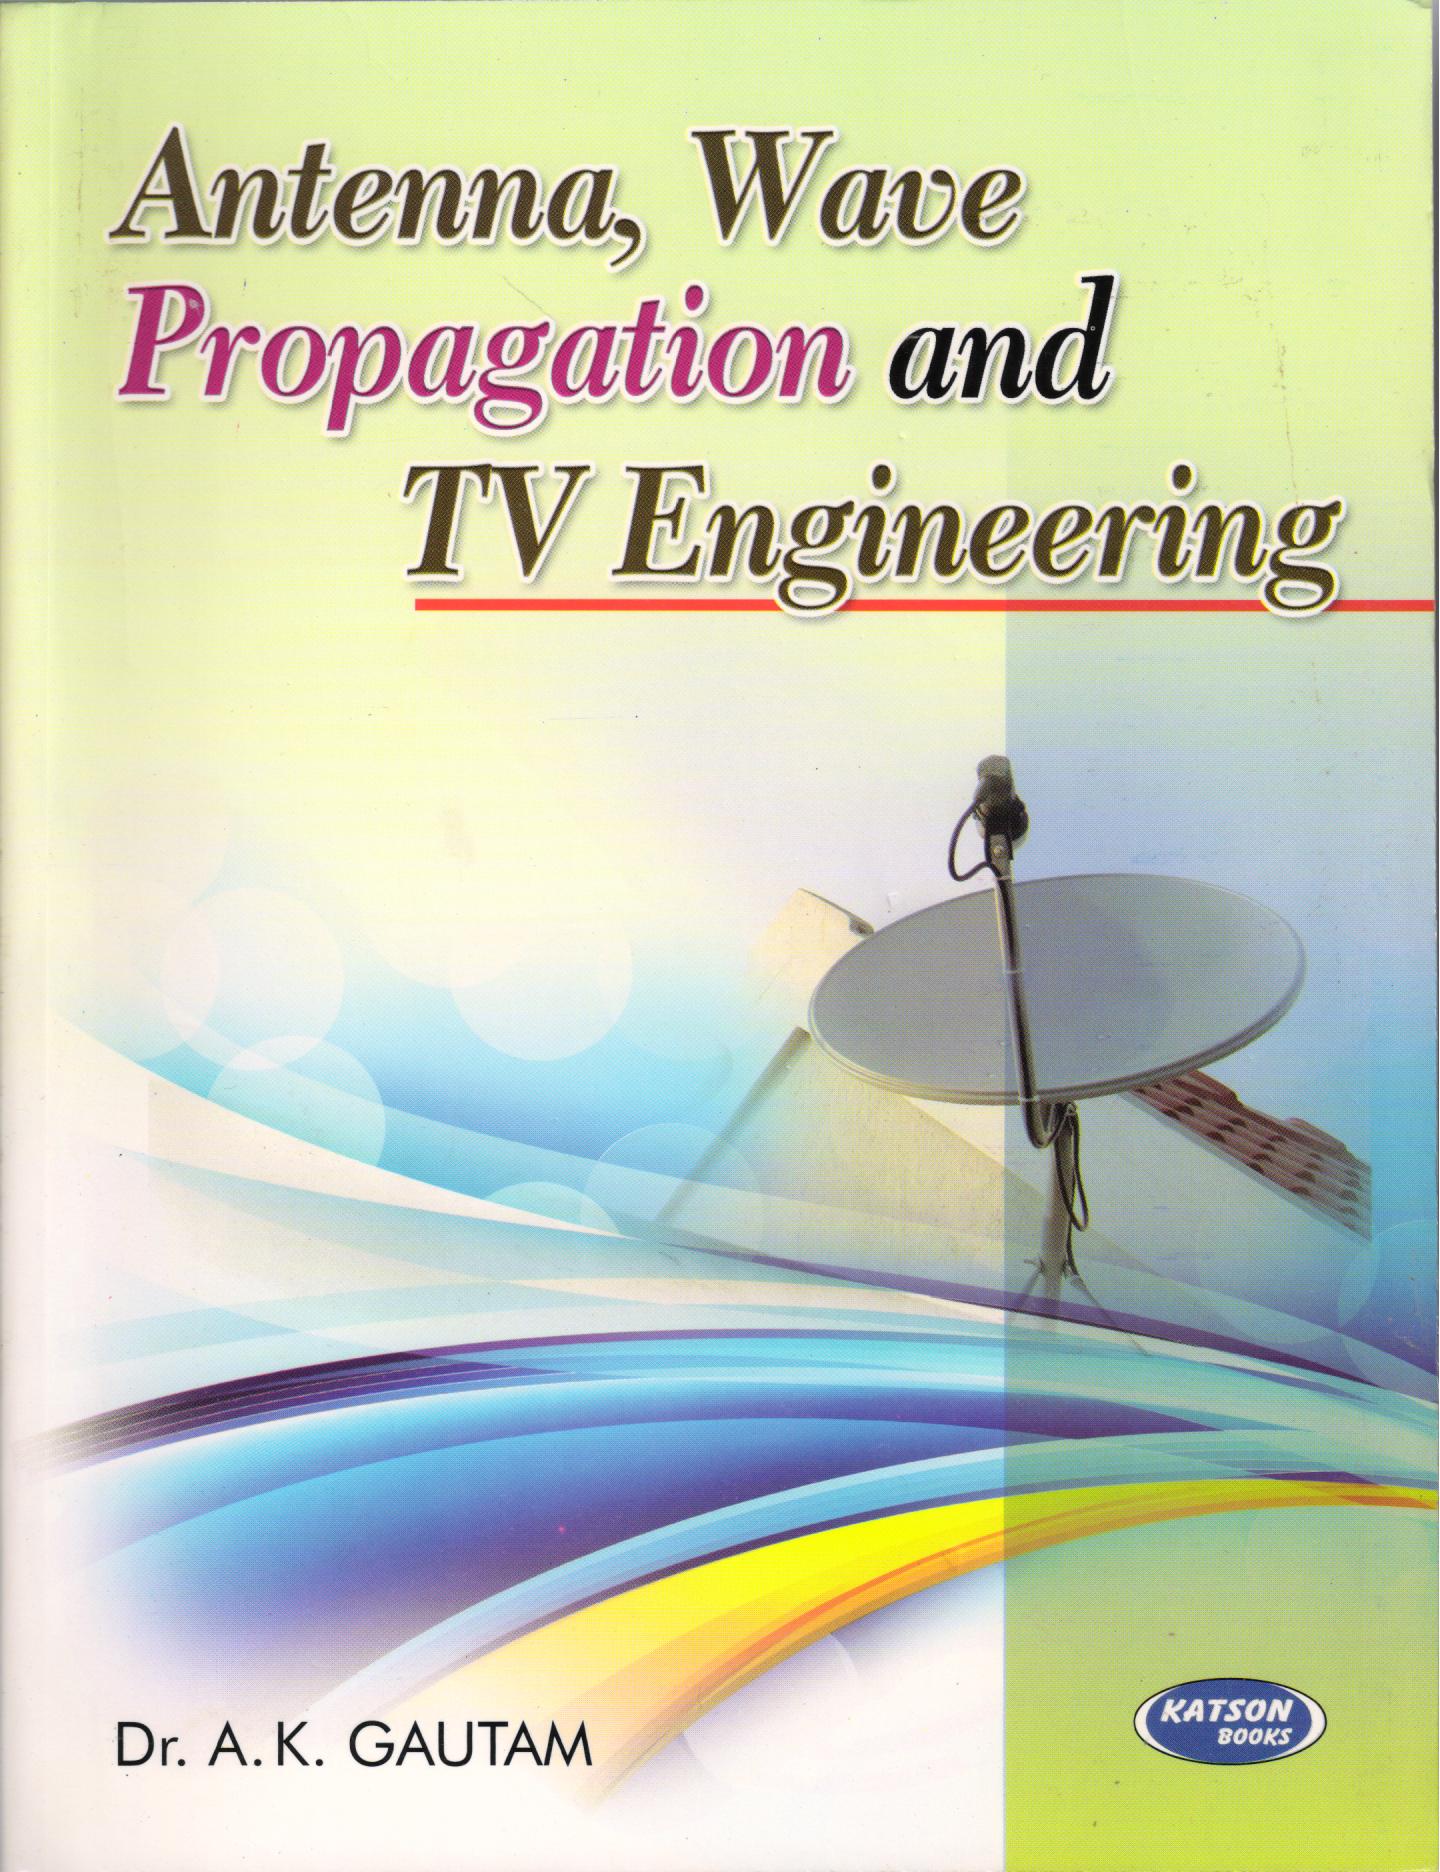 Buy Antenna Wave Propagation and TV Engineering book A.K.Gautam